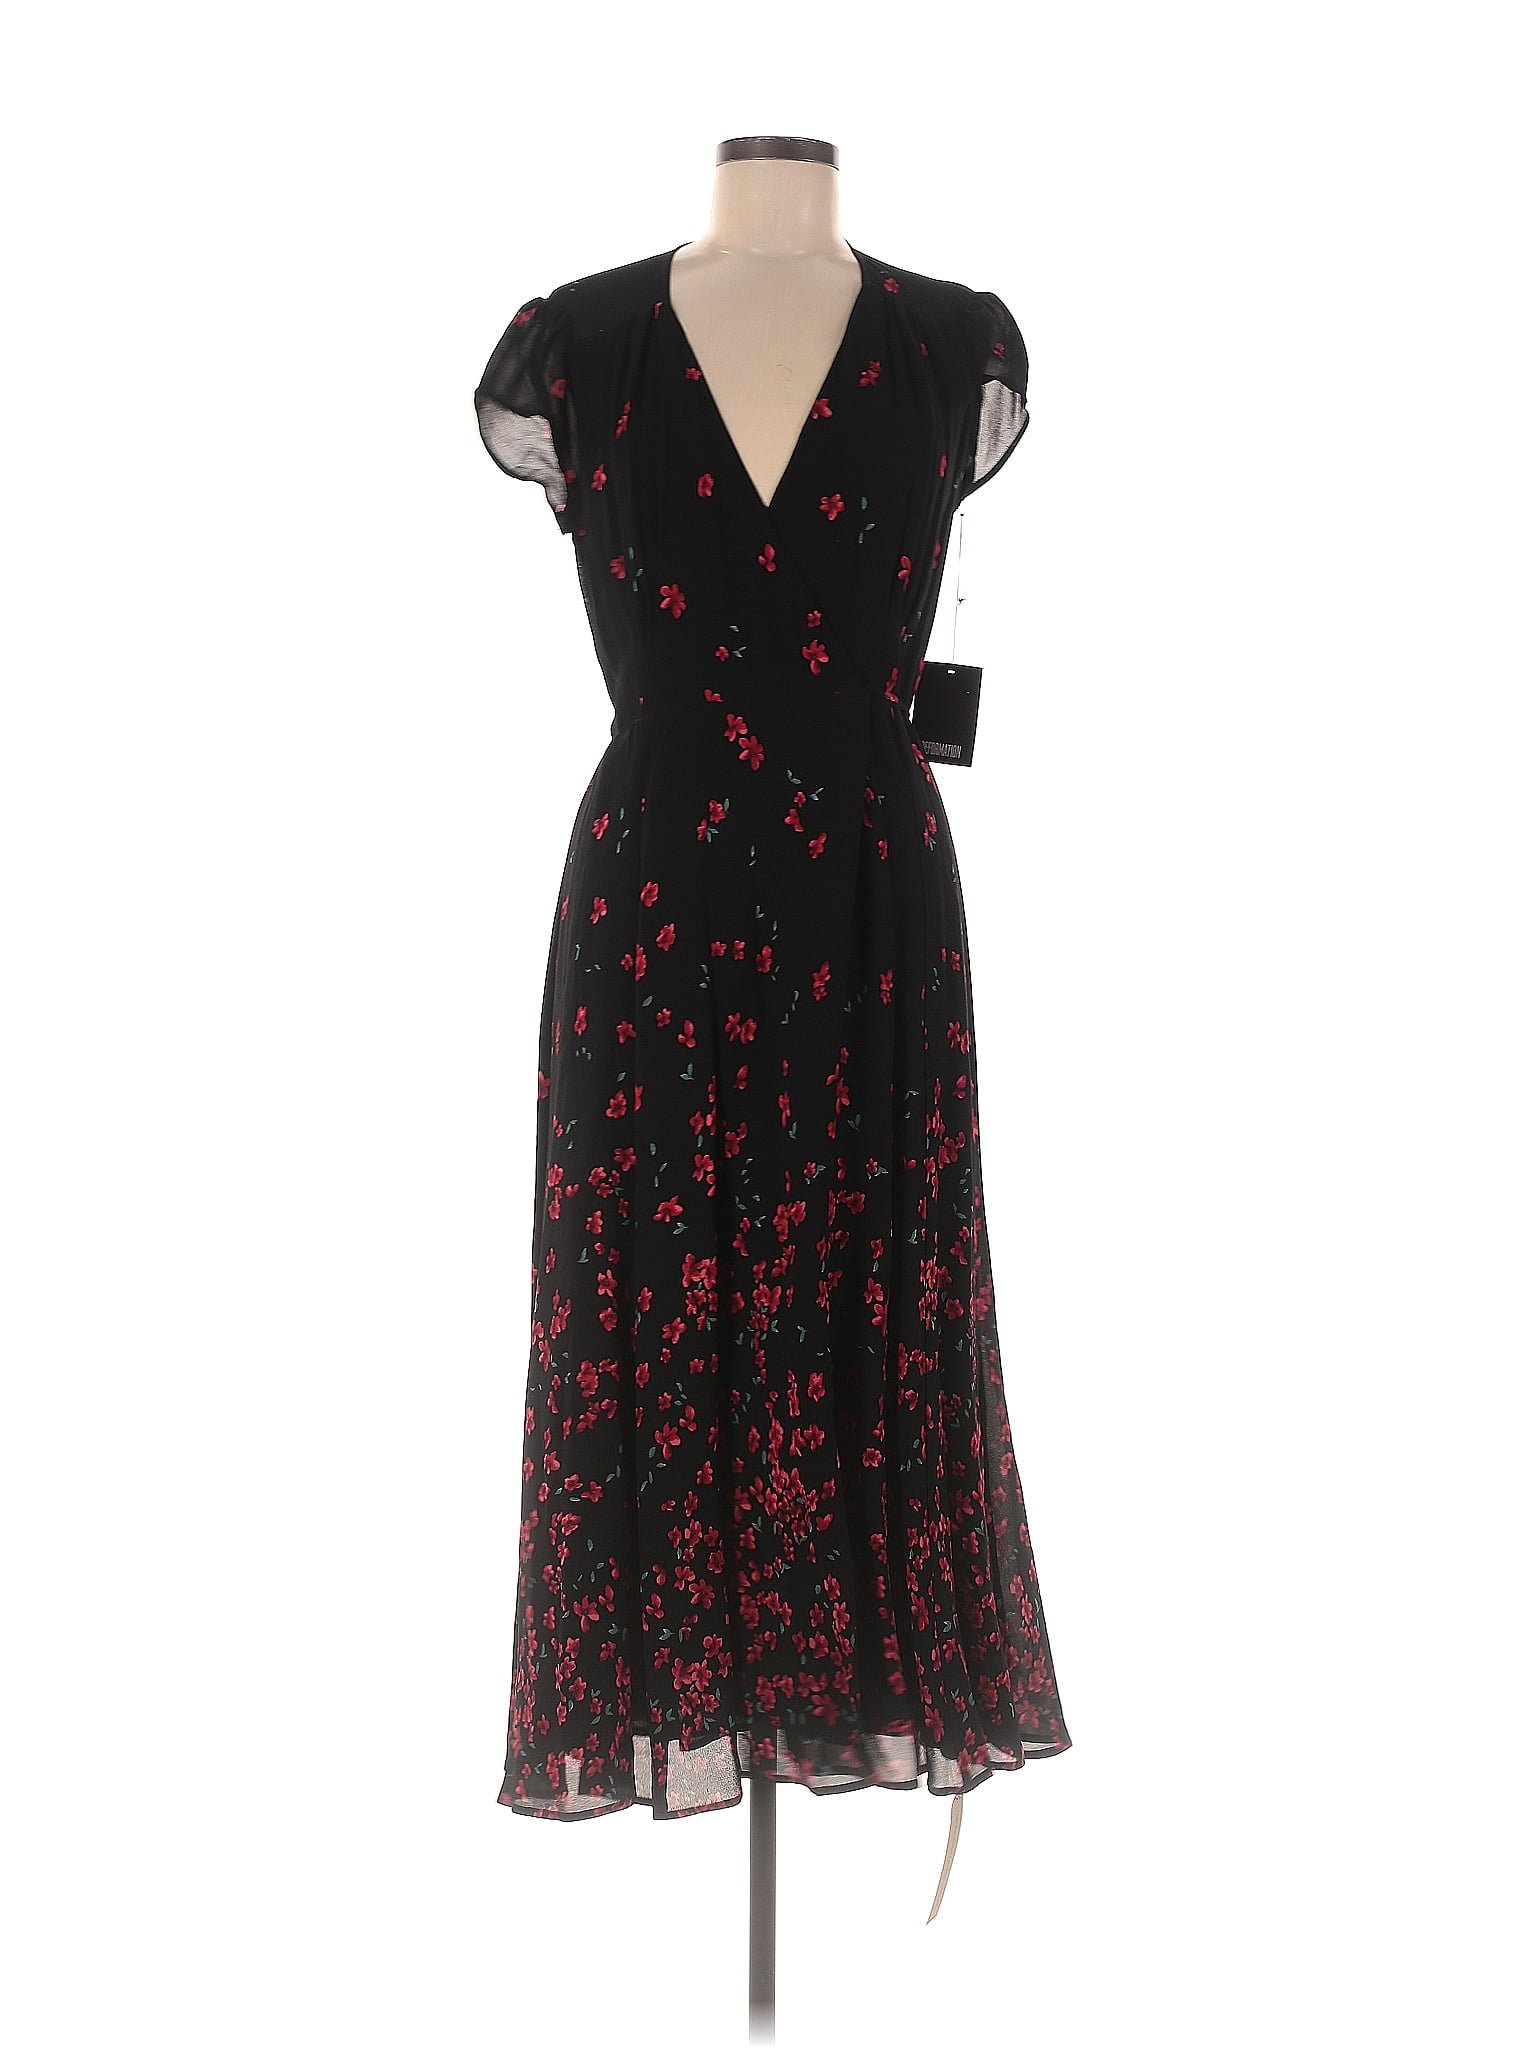 Reformation 100% Viscose Floral Black Casual Dress Size M - 29% off ...